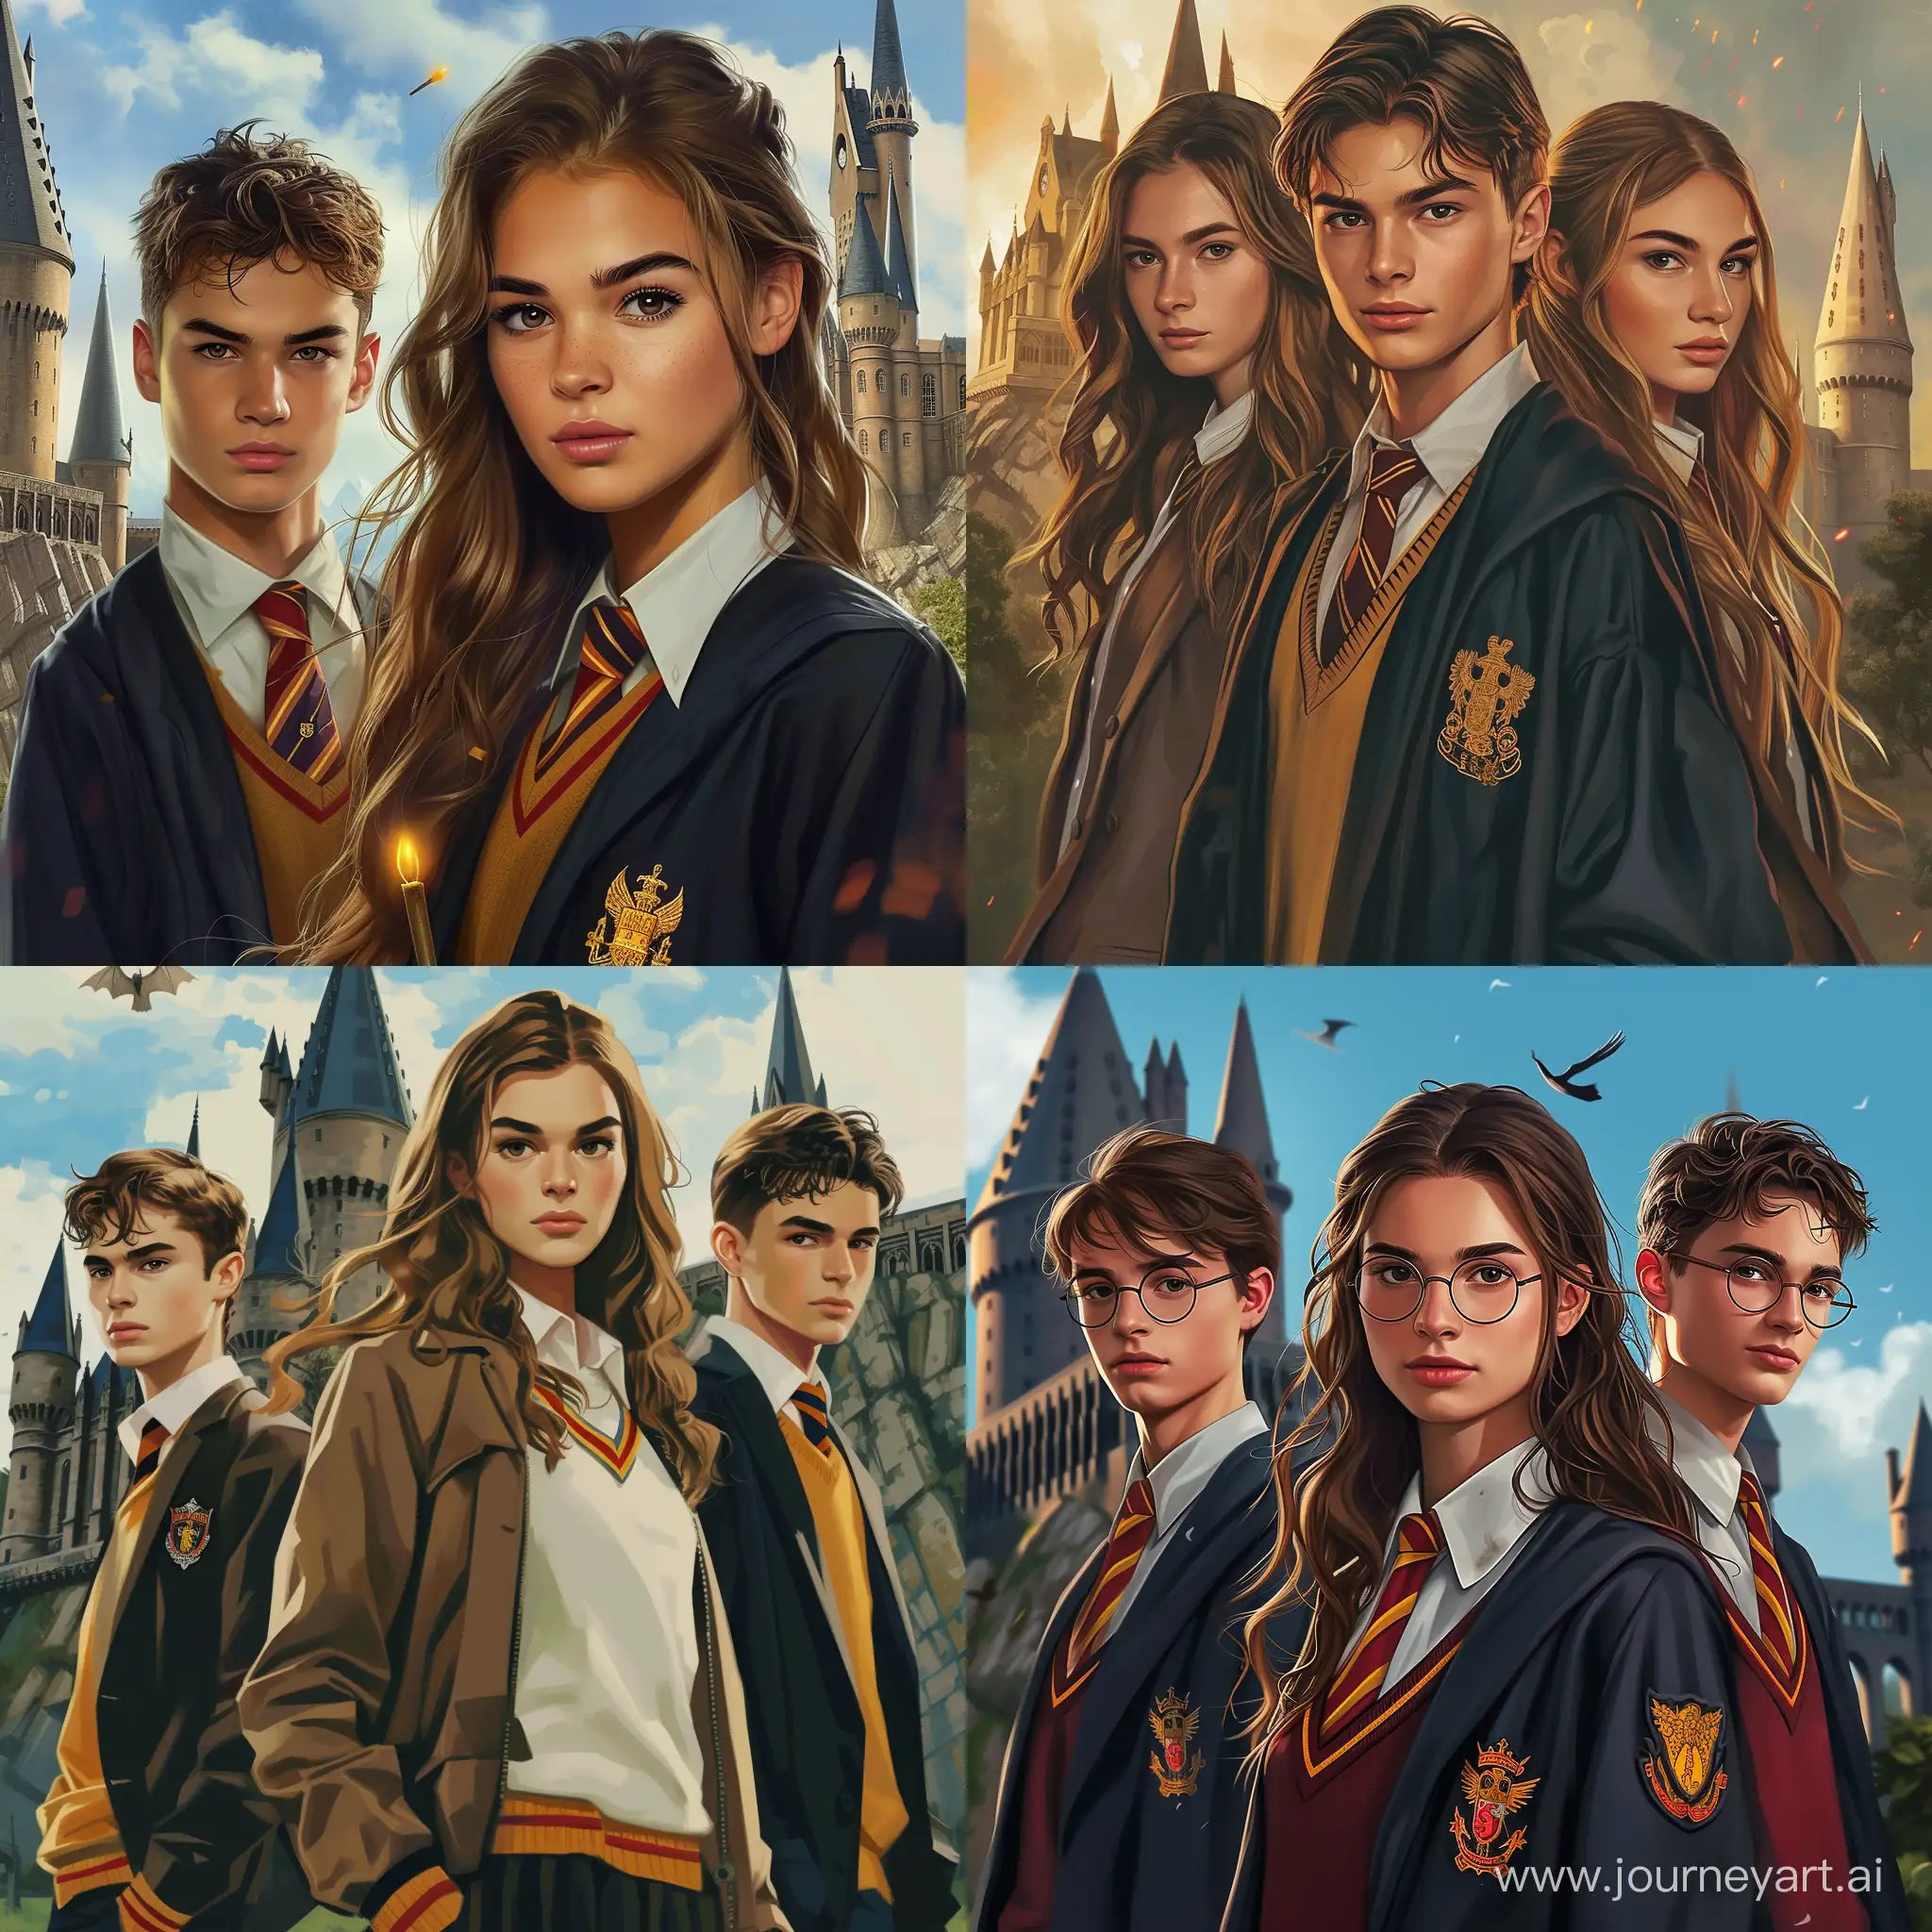 Jordan Barrett, Timothy Shalome, Odeya Rush, teenagers, 15 years old, castle, modern, students Hogwarts, high quality, high detail, cartoon art